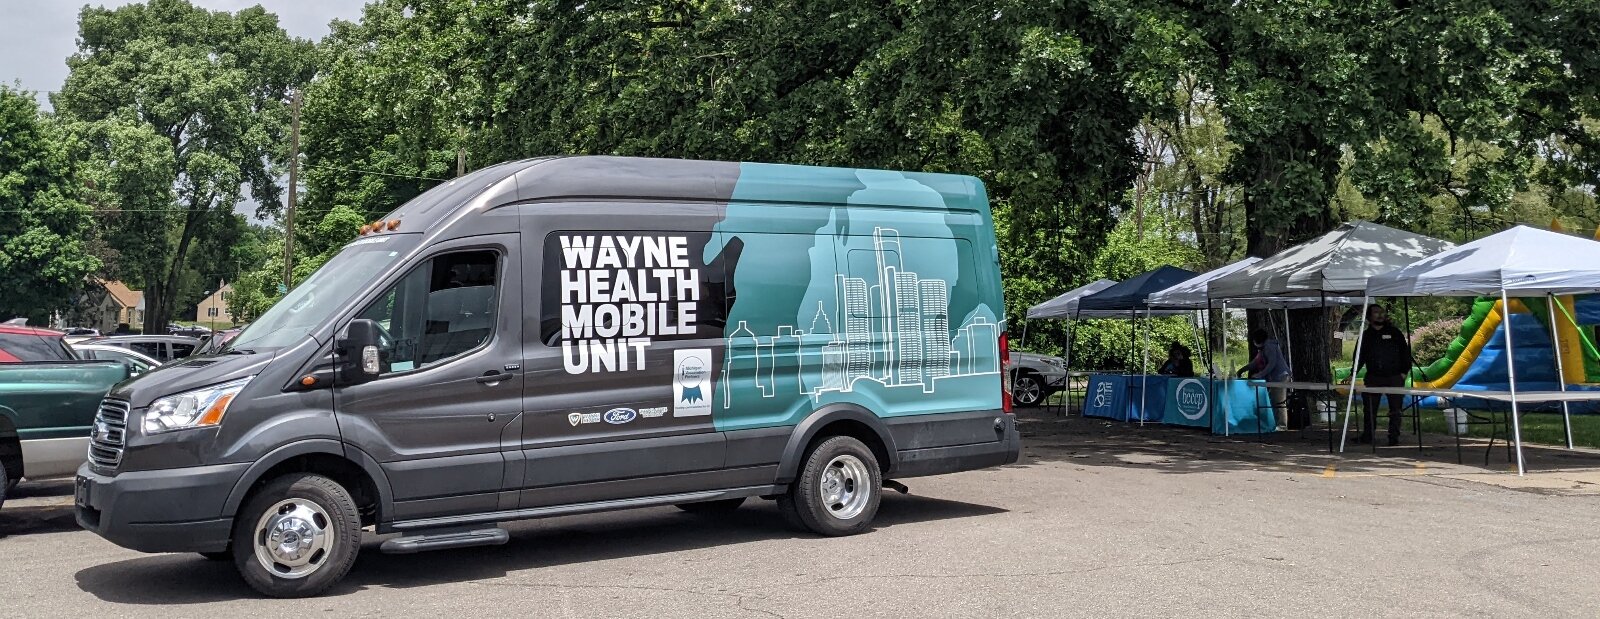 The Wayne Health Mobile Unit (WHMU)